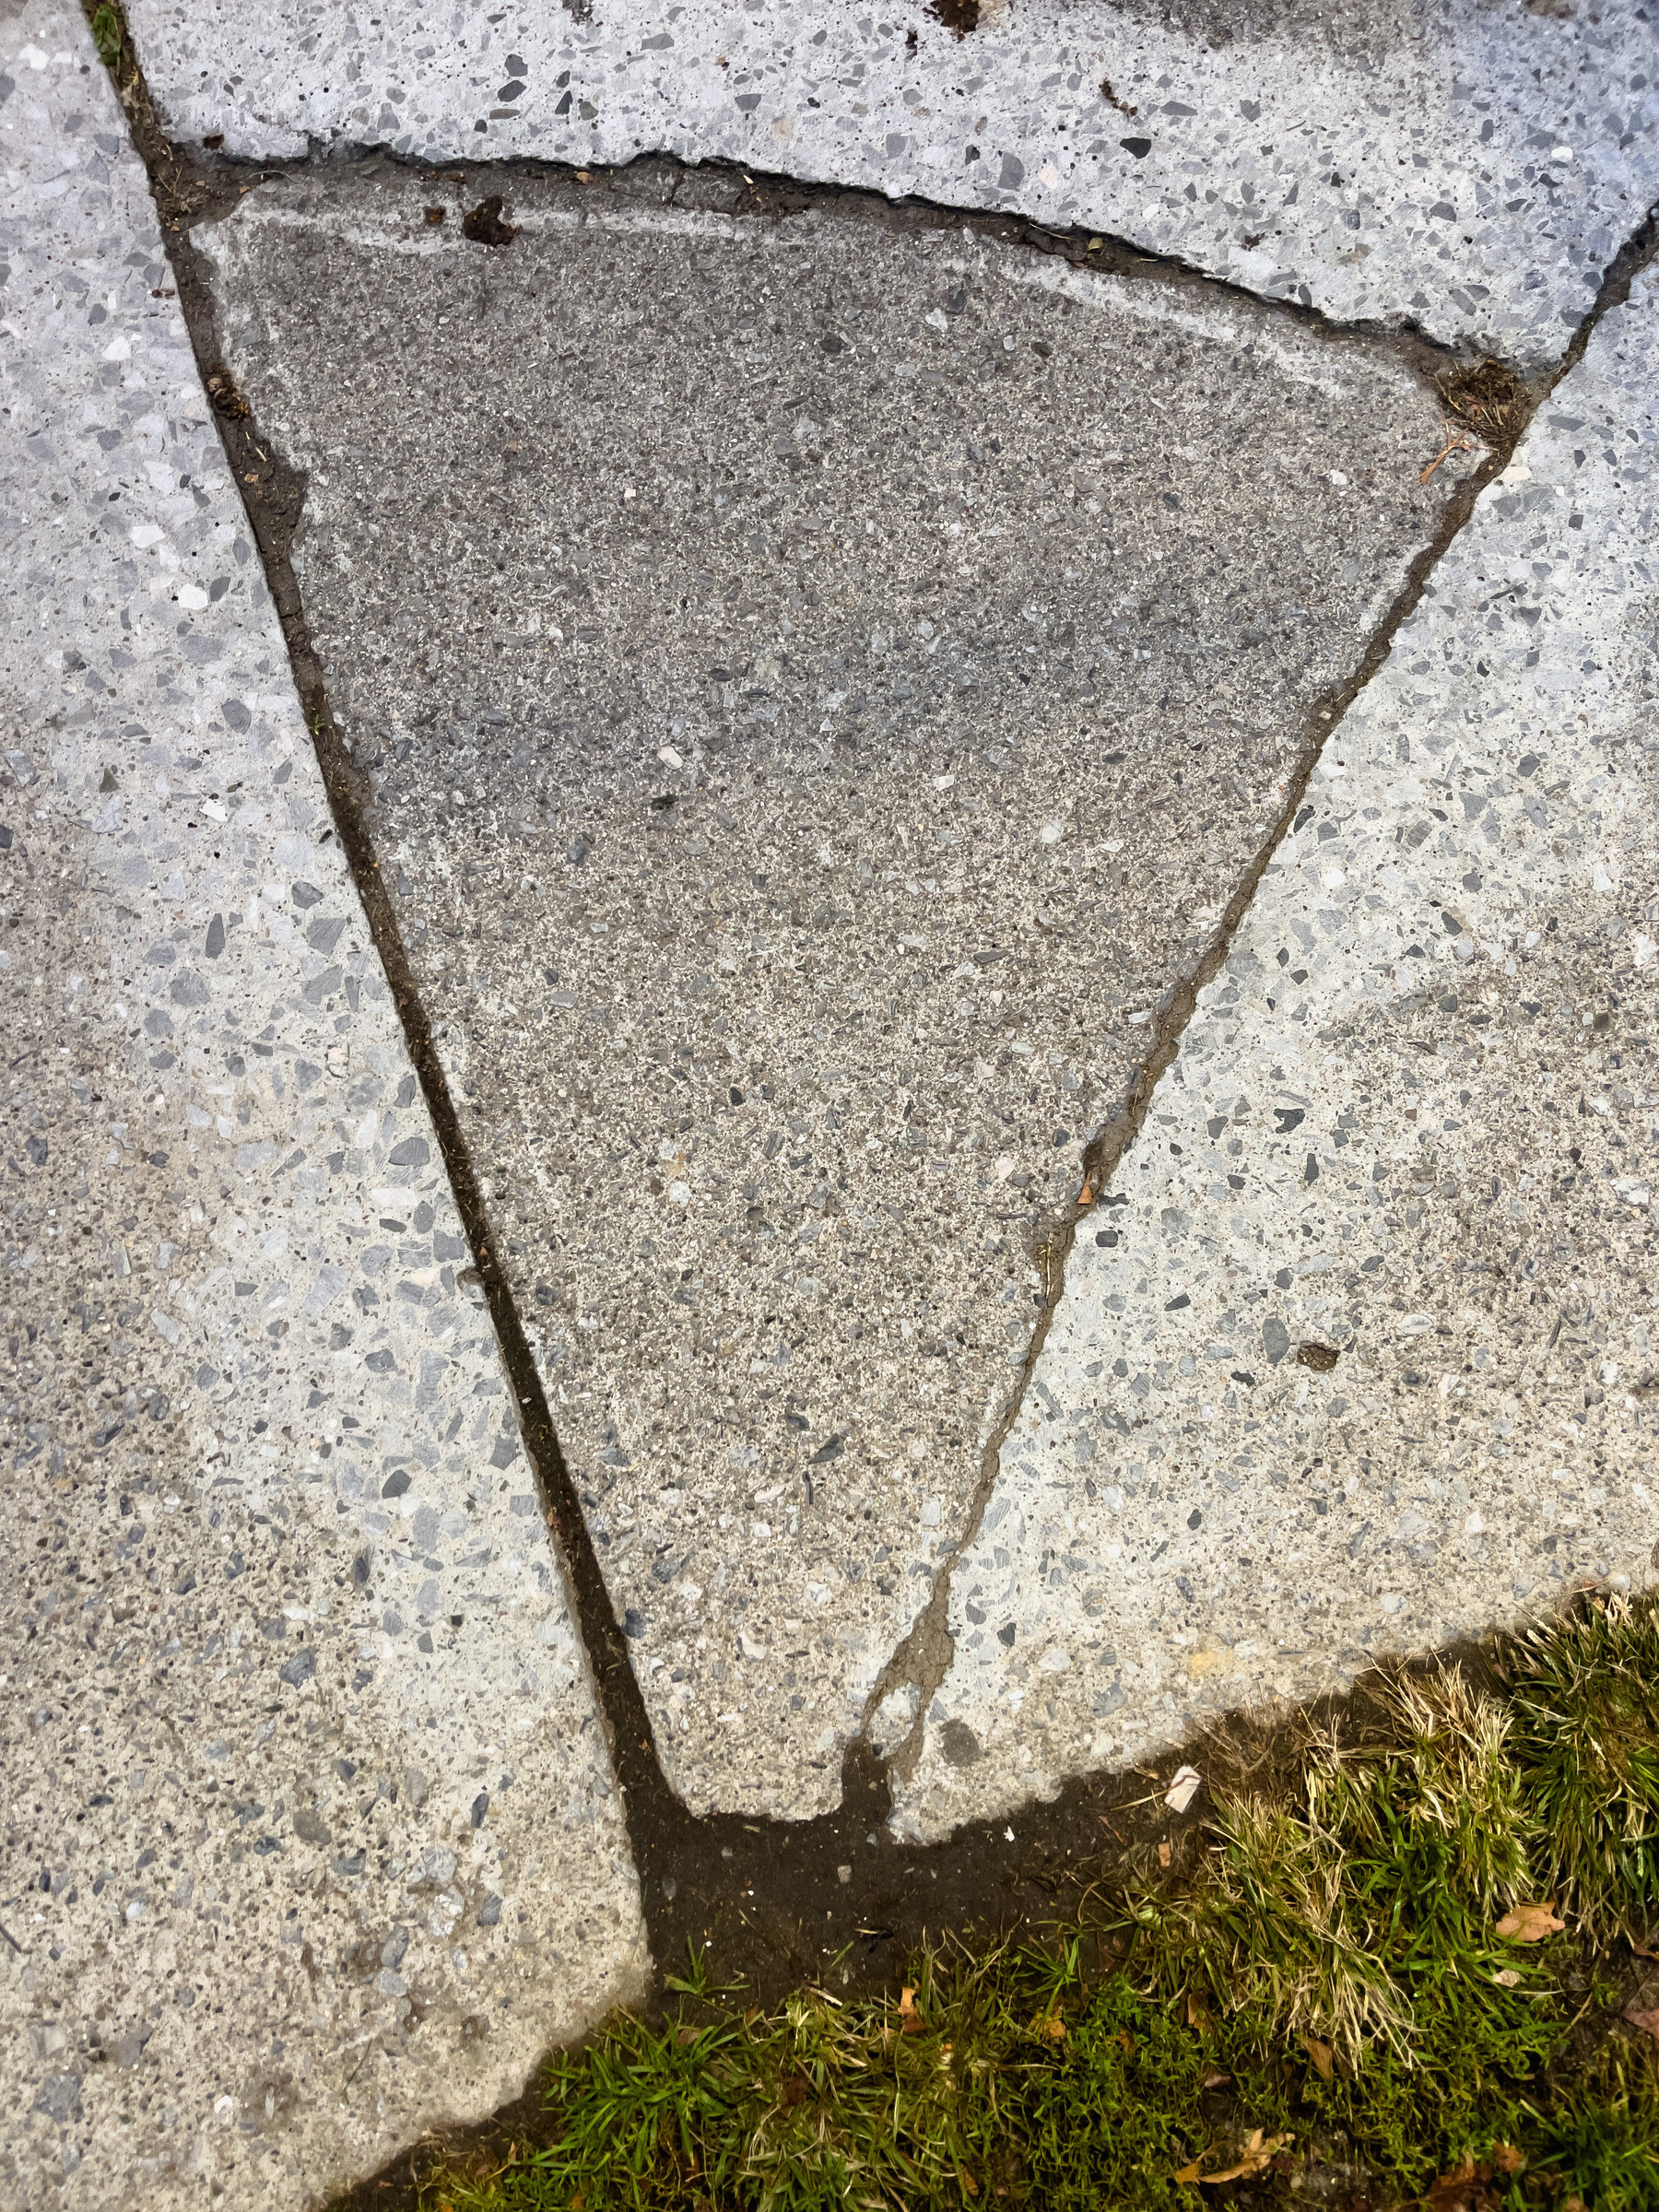 Triangular patch in concrete sidewalk.